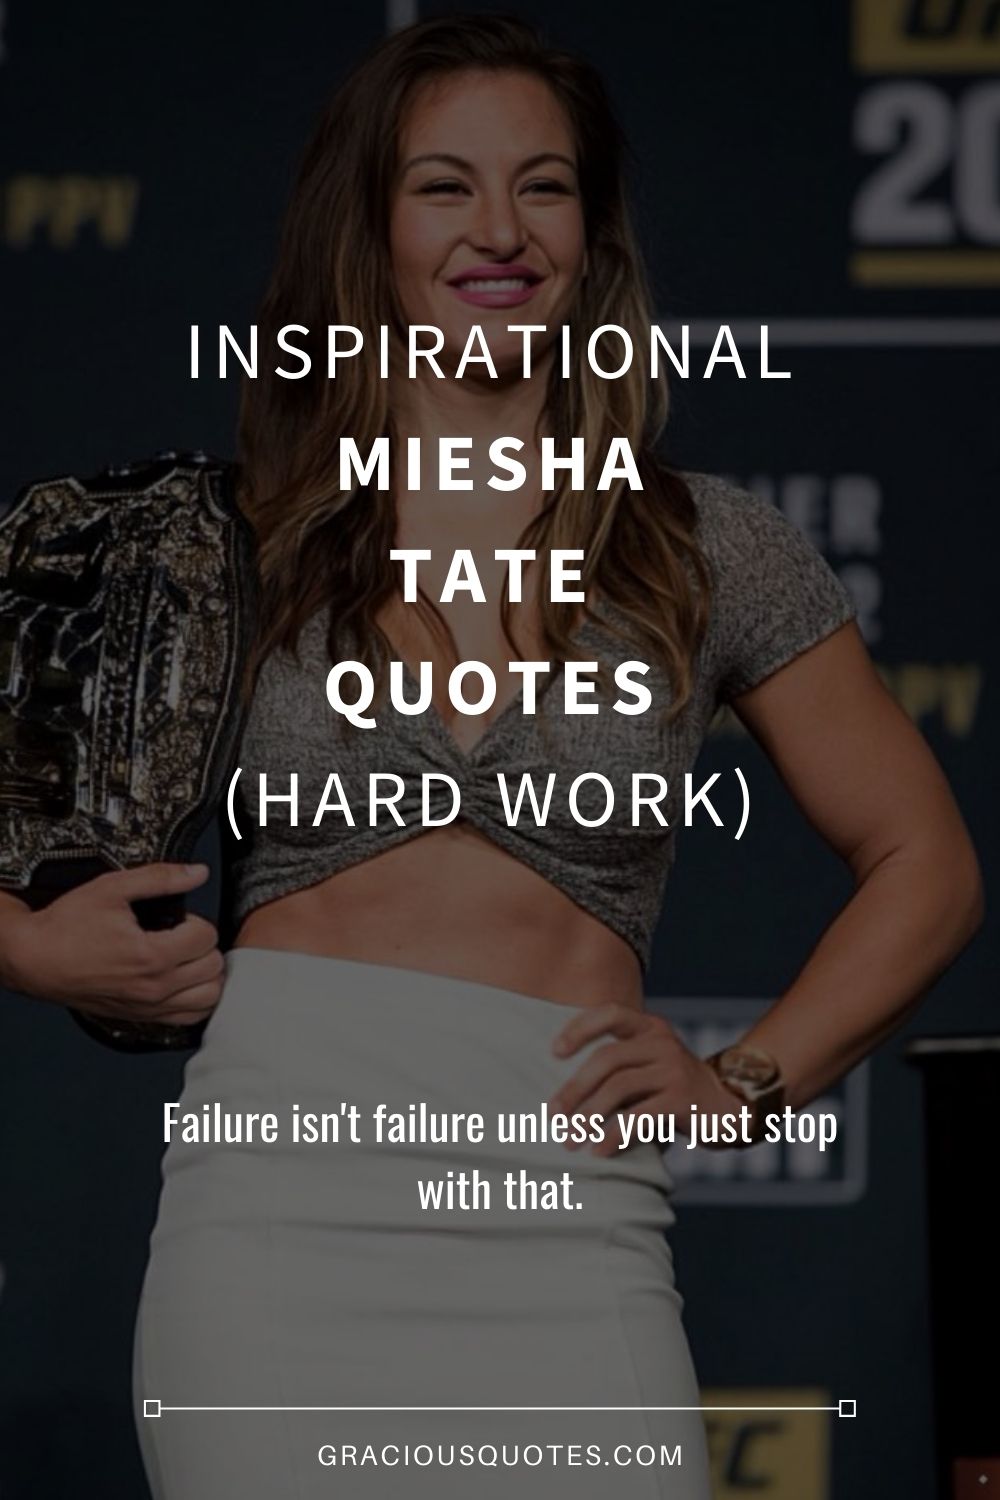 Inspirational Miesha Tate Quotes (HARD WORK) - Gracious Quotes